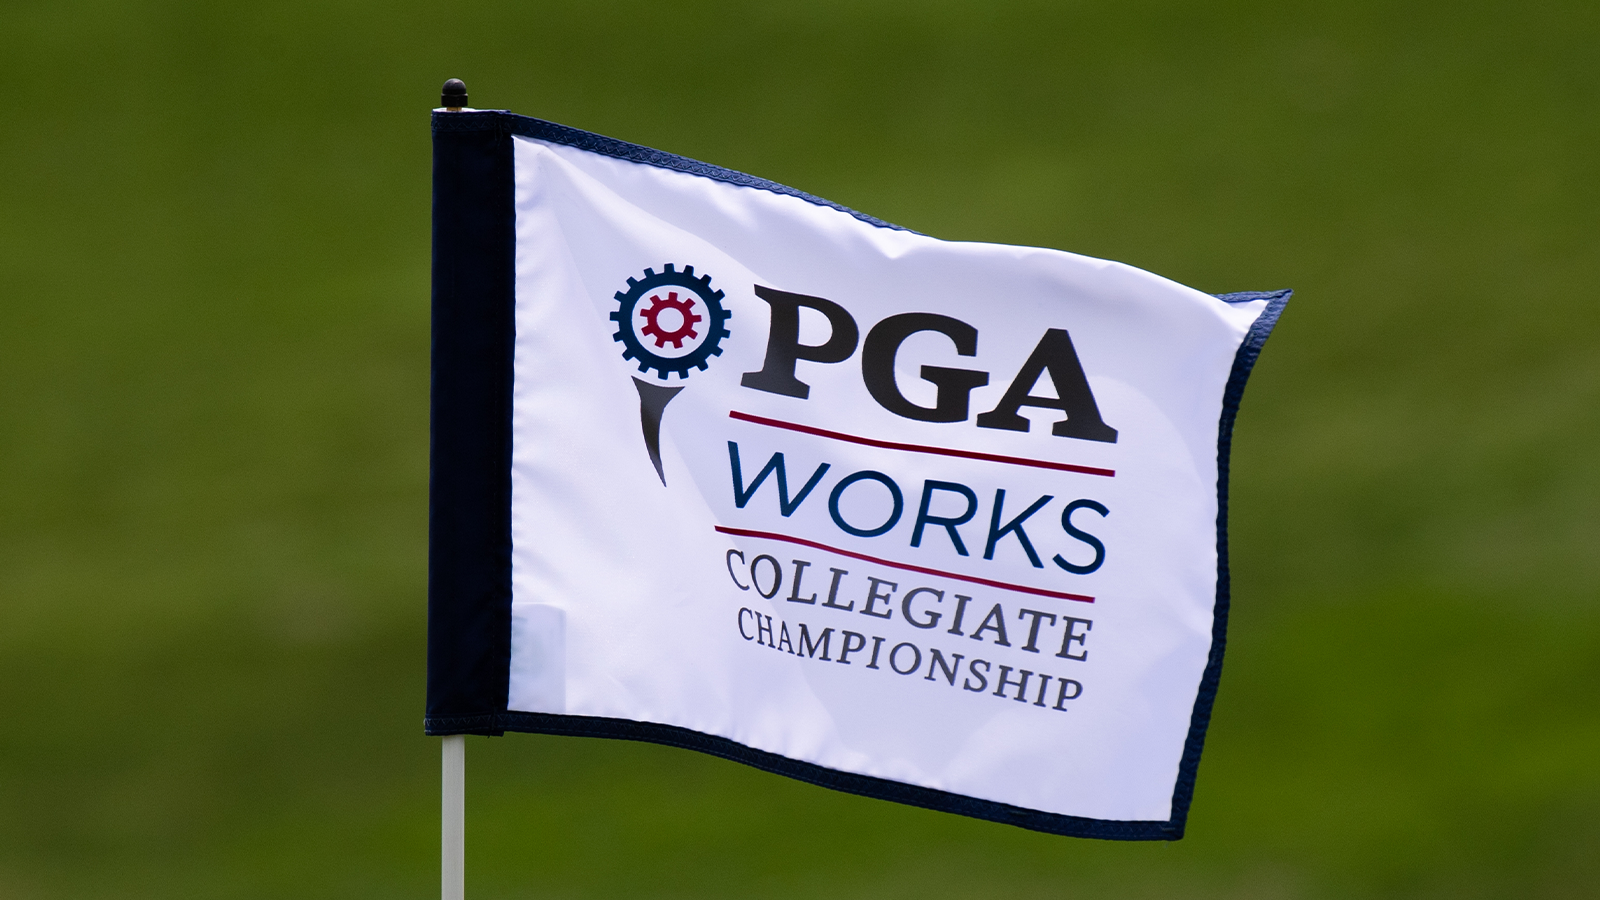  PGA Works Collegiate Championship pin flag. (Photo by Montana Pritchard/PGA of America)